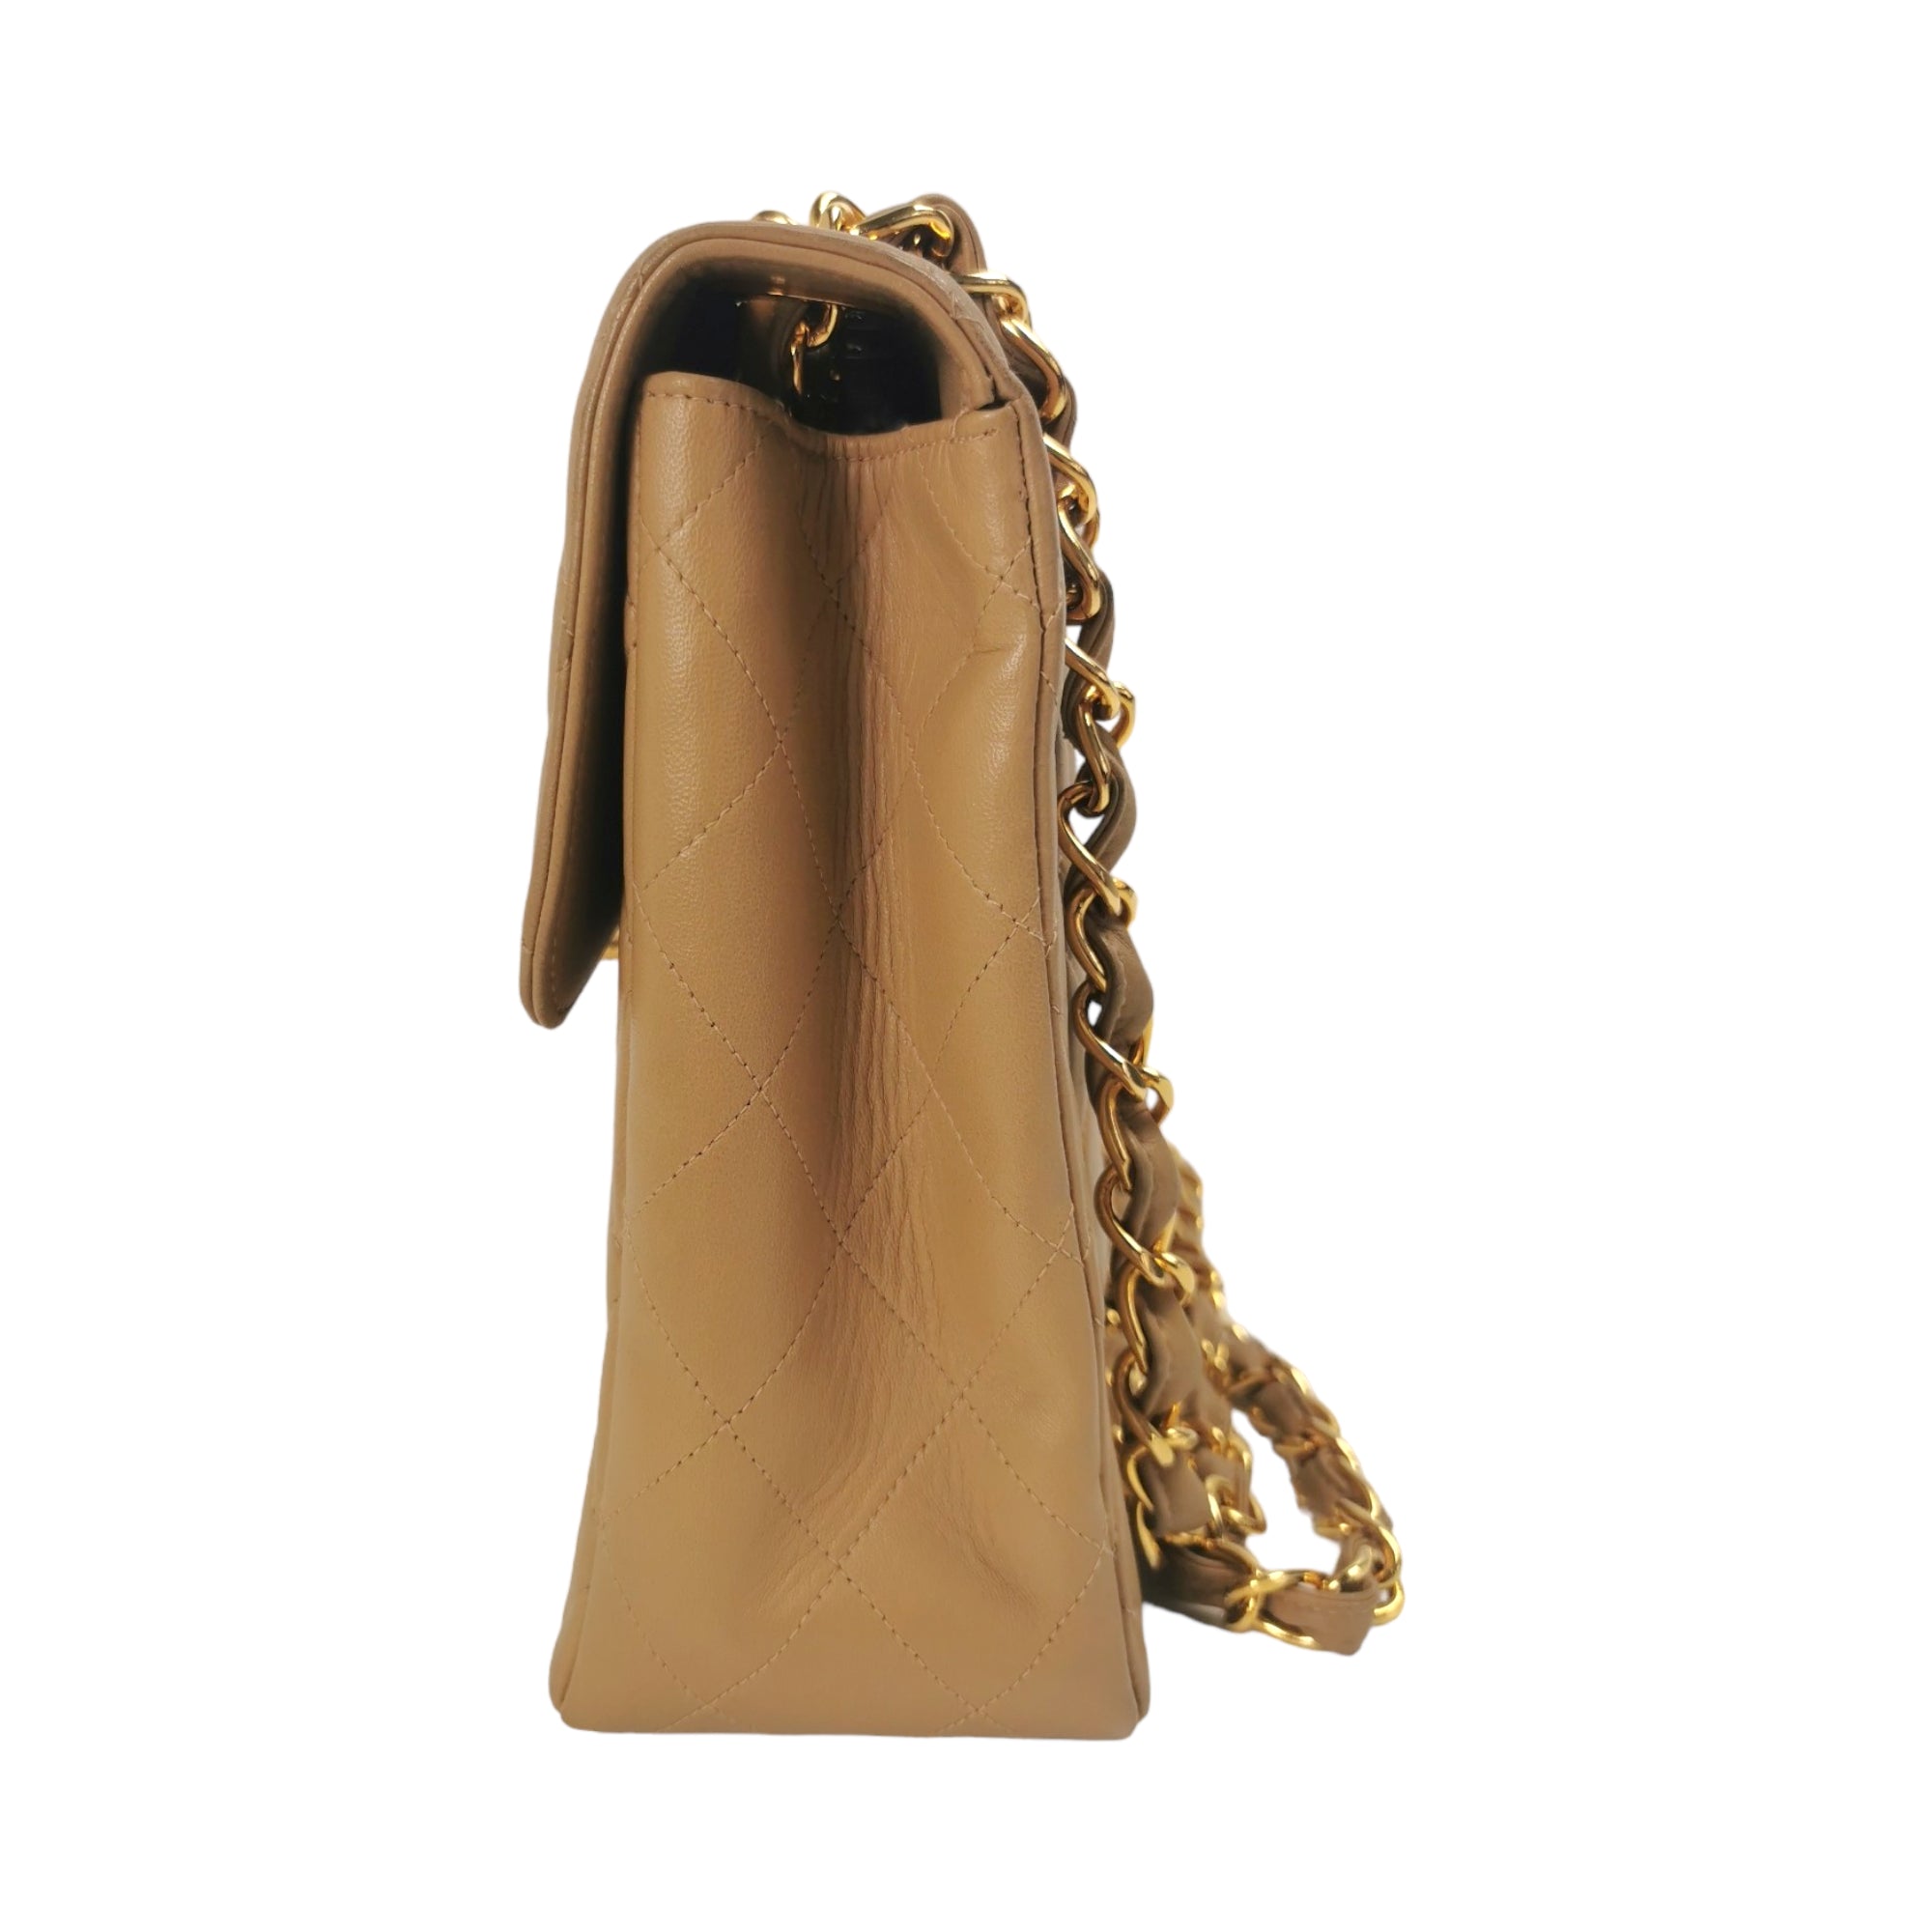 CHANEL Jumbo Gold Chain Beige Lambskin Shopper Tote Bag item